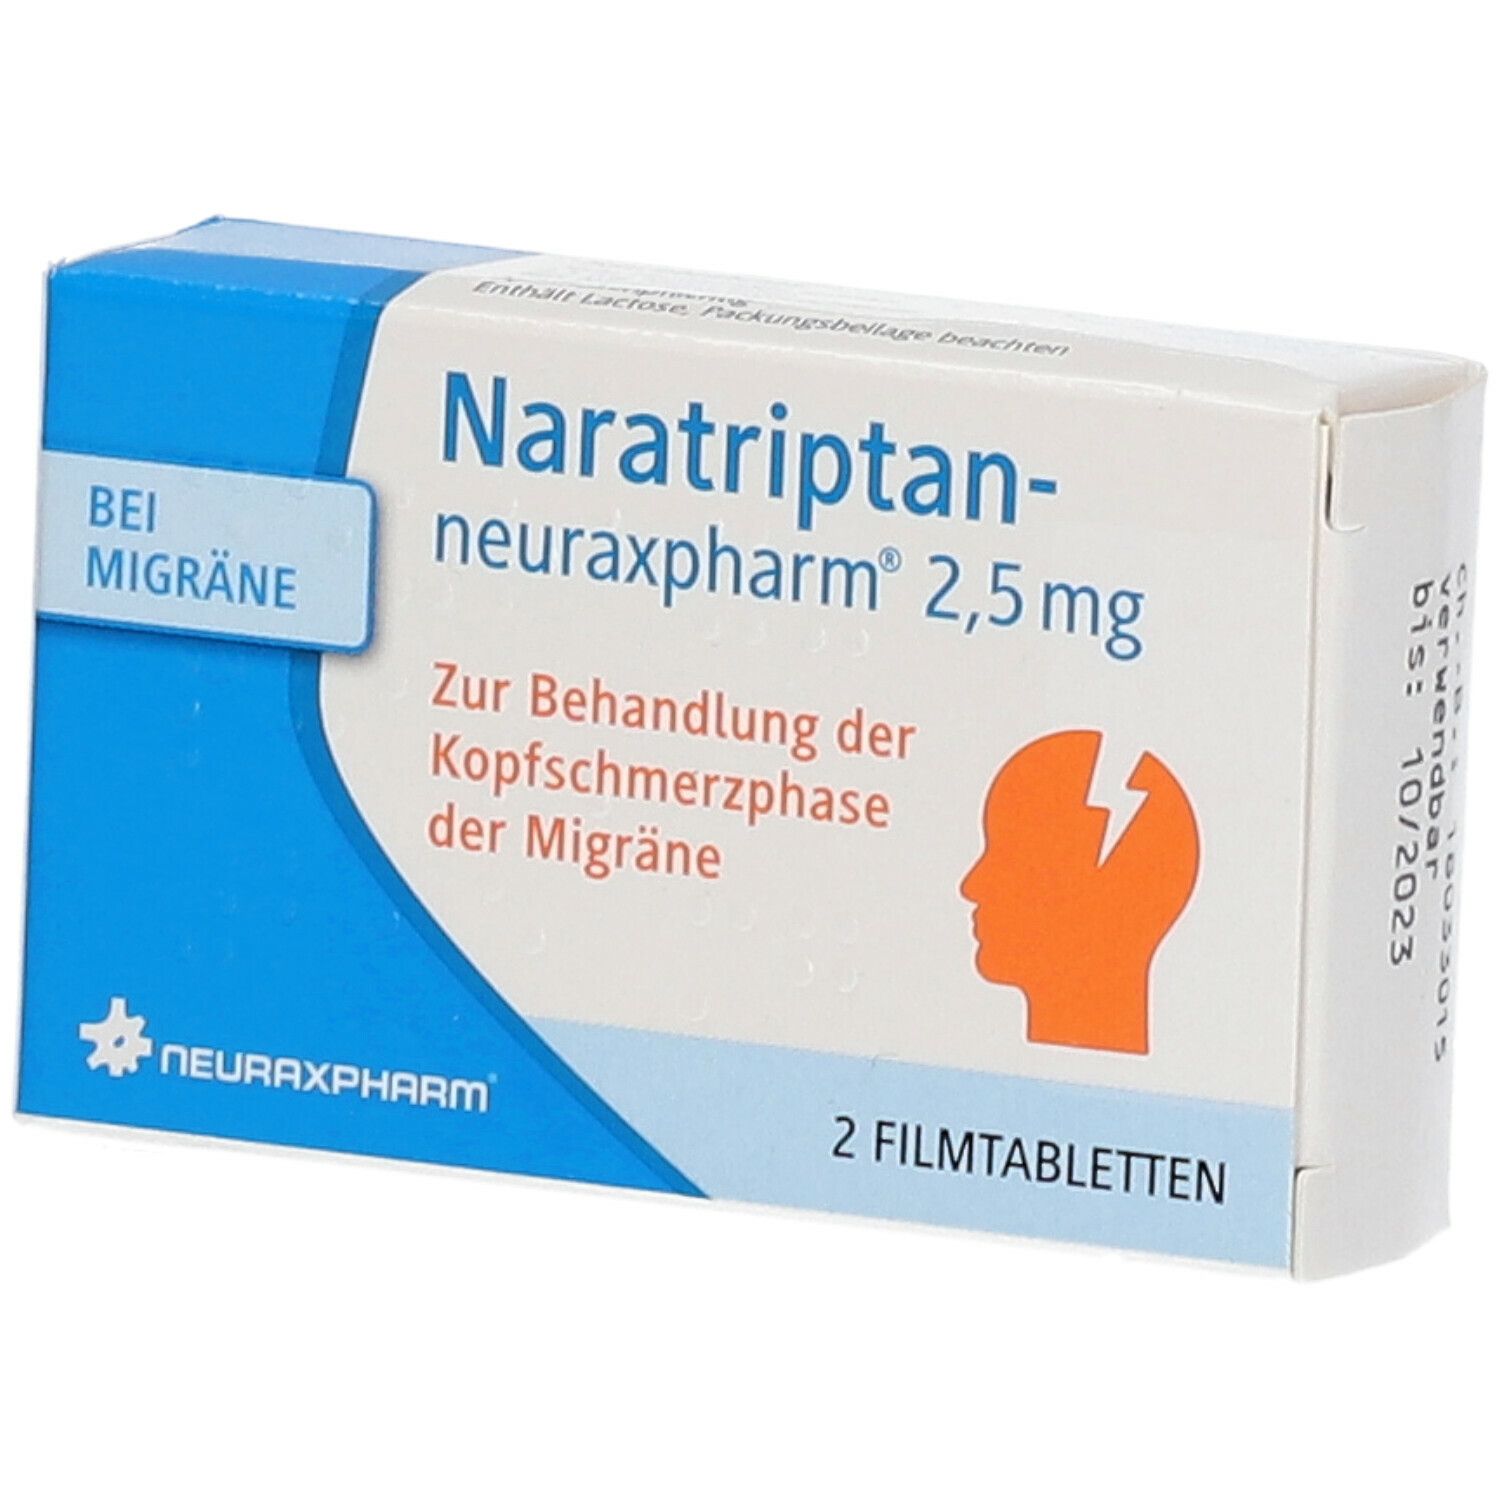 Naratriptan-neuraxpharm® 2,5 mg